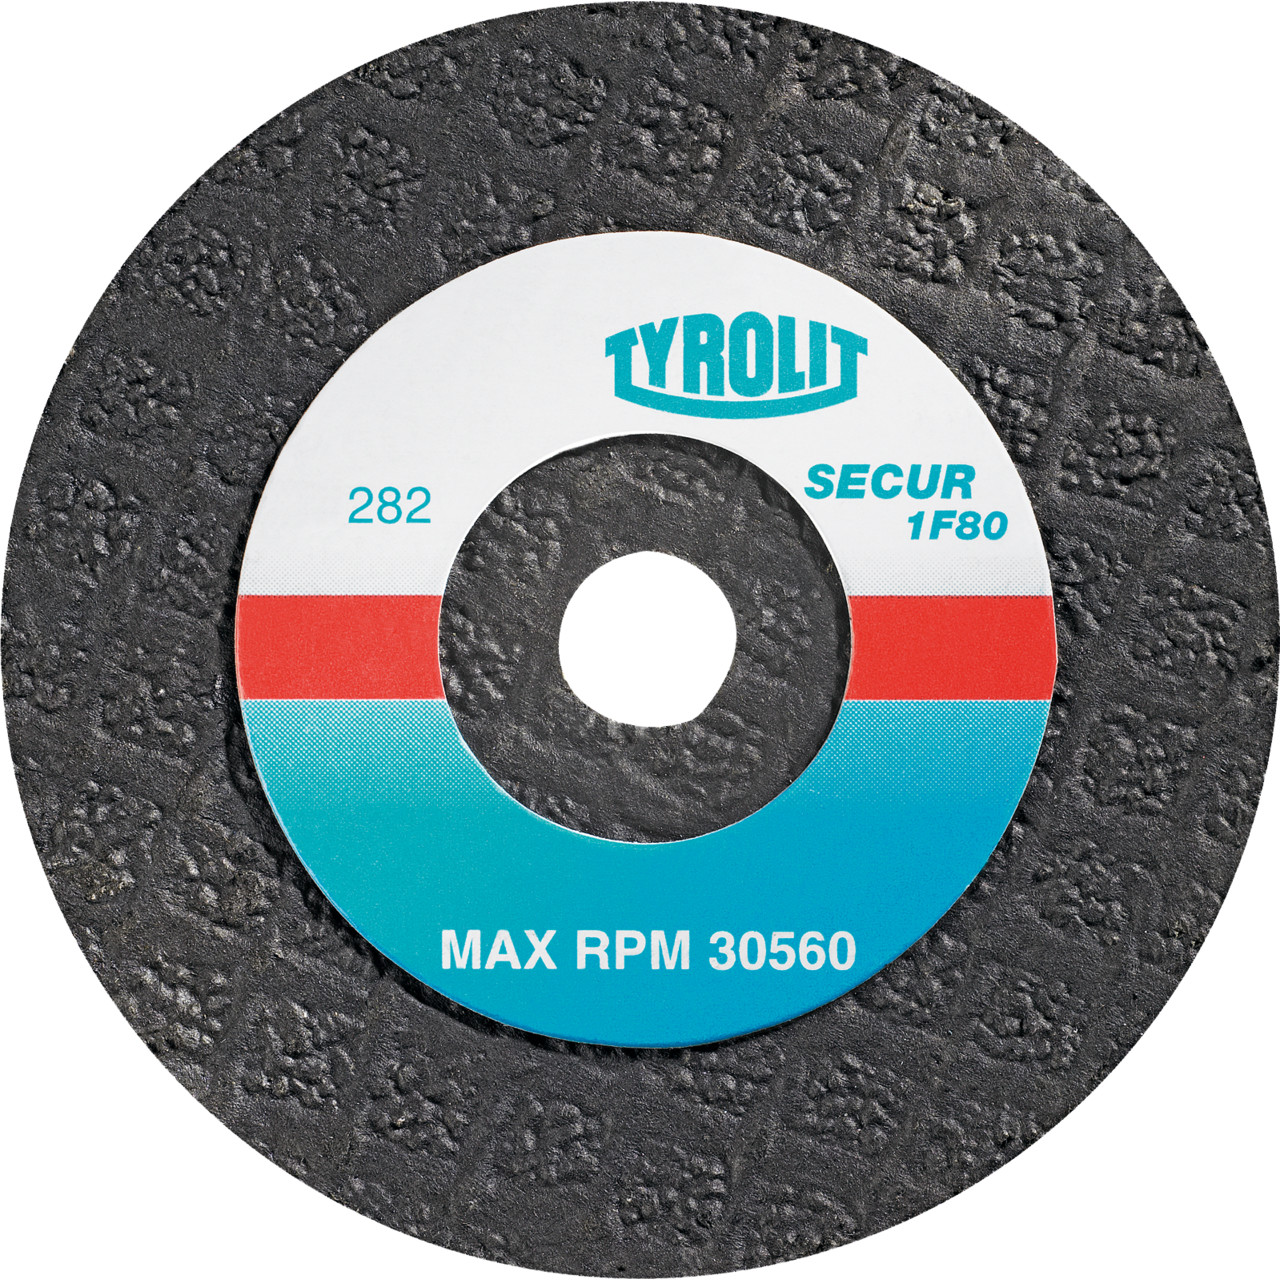 TYROLIT discos de desbaste DxDxH 50x19x10 1F80 para acero inoxidable, forma: 1F80 - versión recta (disco de desbaste), Art. 441245